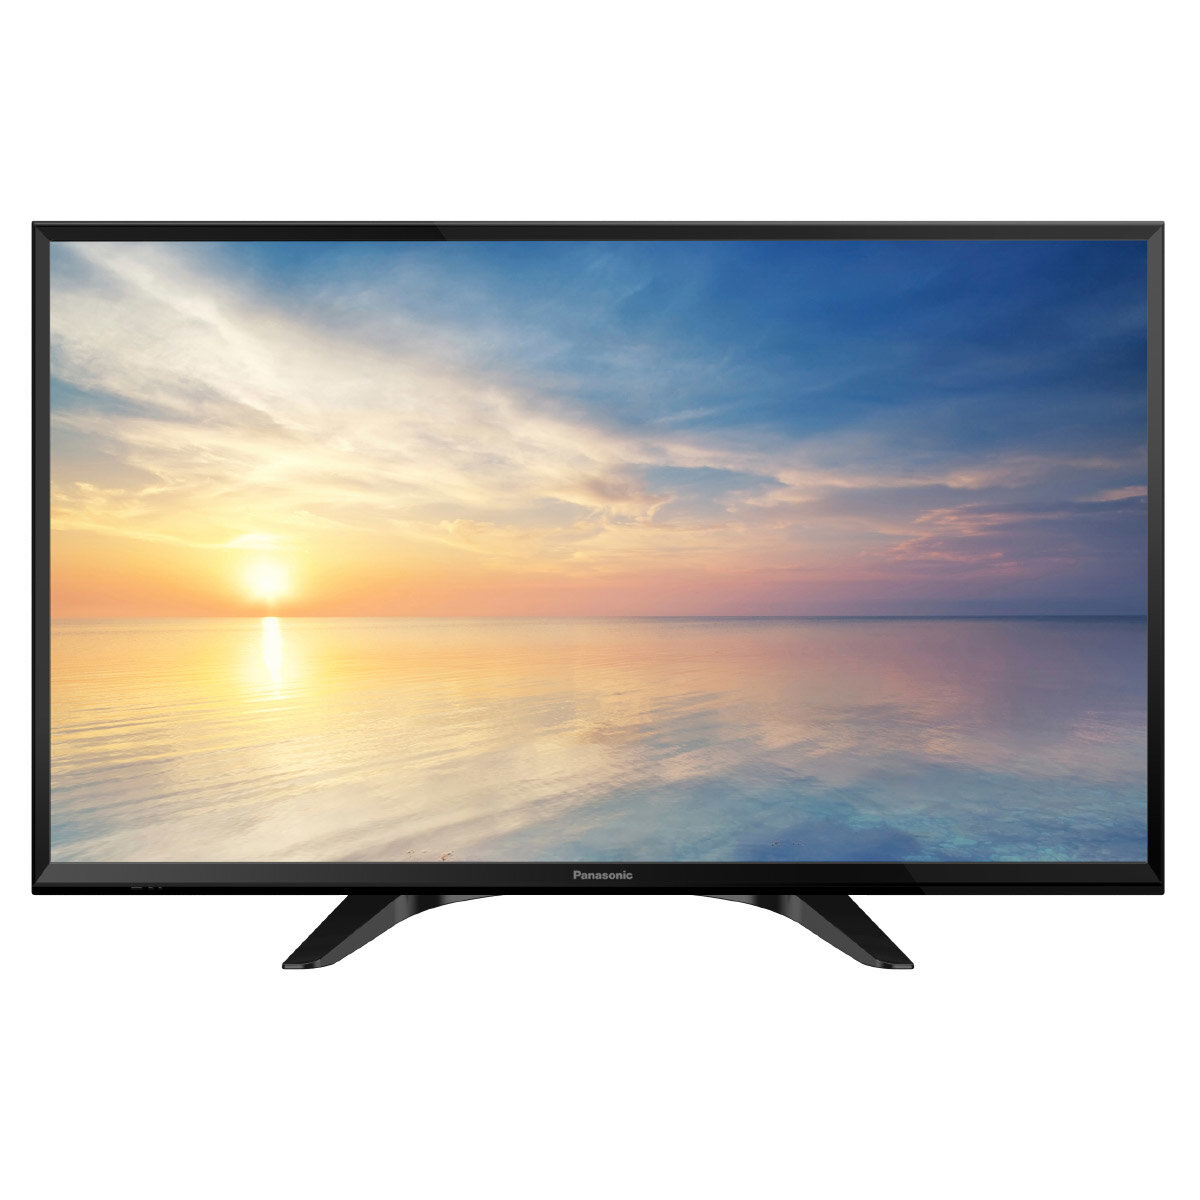 Panasonic TH-32F400A Inch 80cm HD LED TV | Online